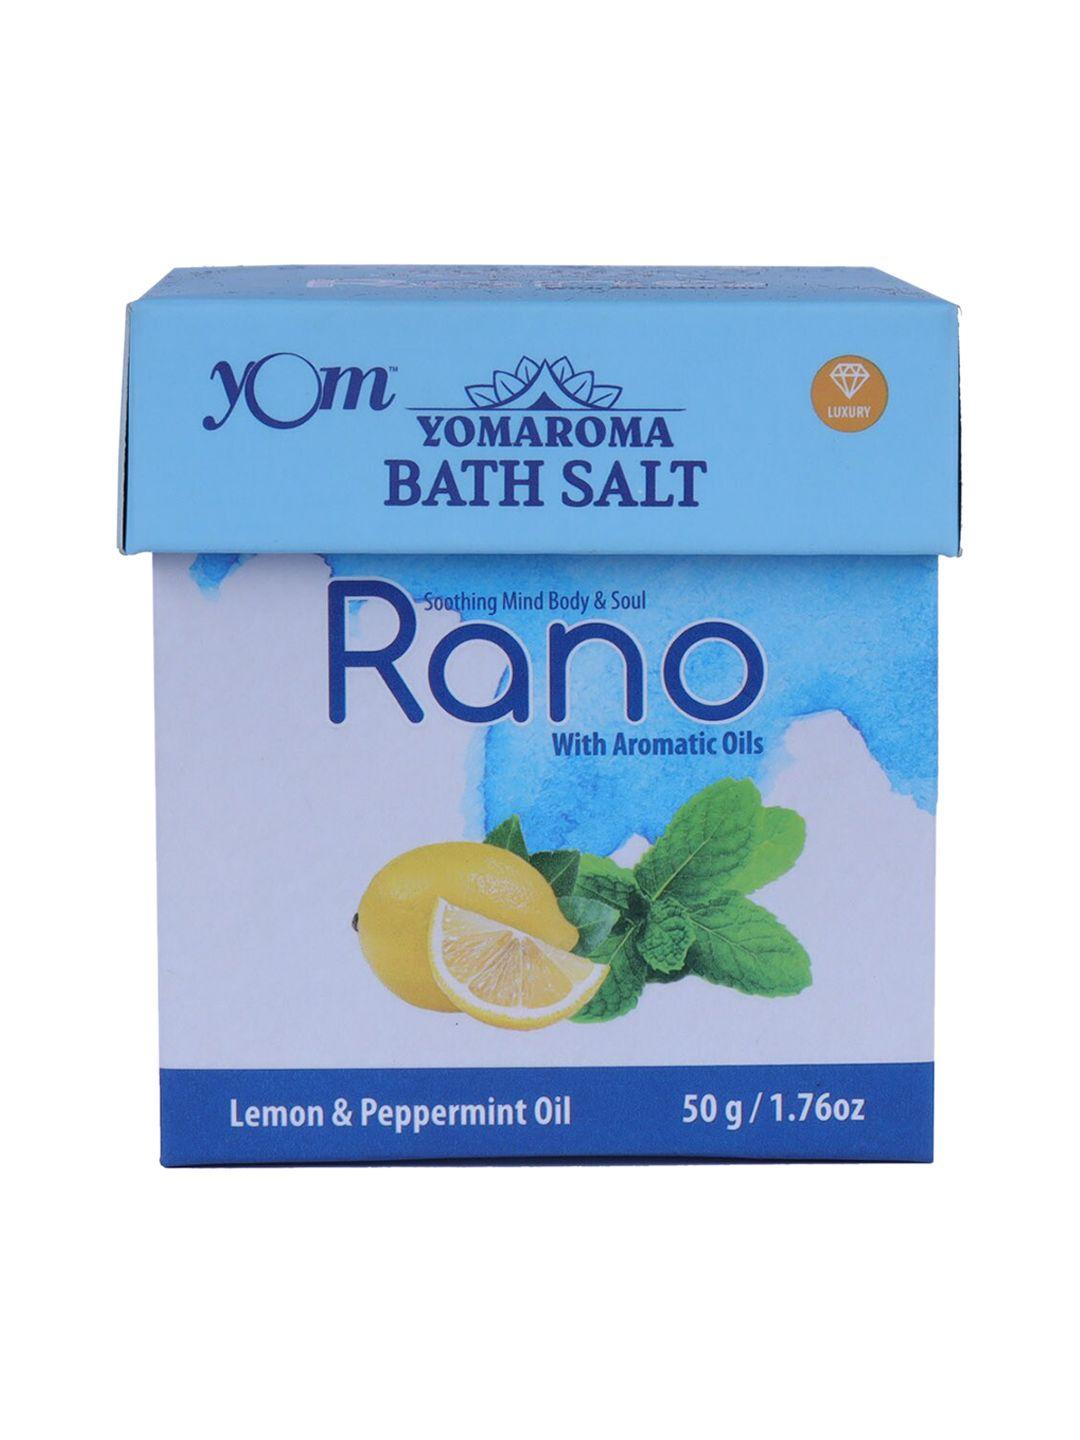 yom yomaroma rano bath salt with aromatic oils -50gm